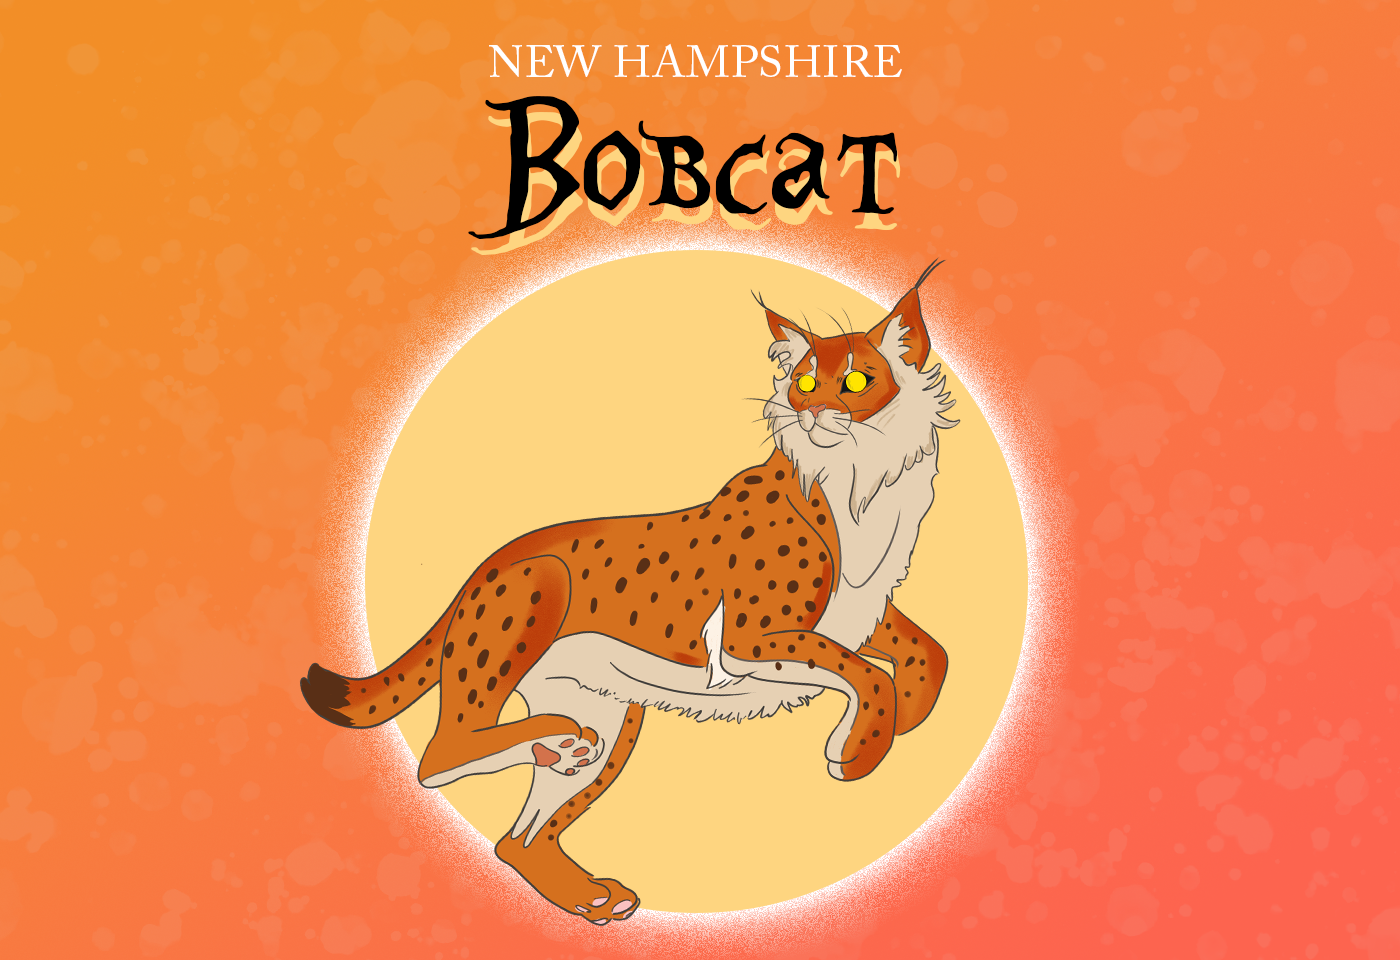 Bobcat New Hampshire State Wildcat